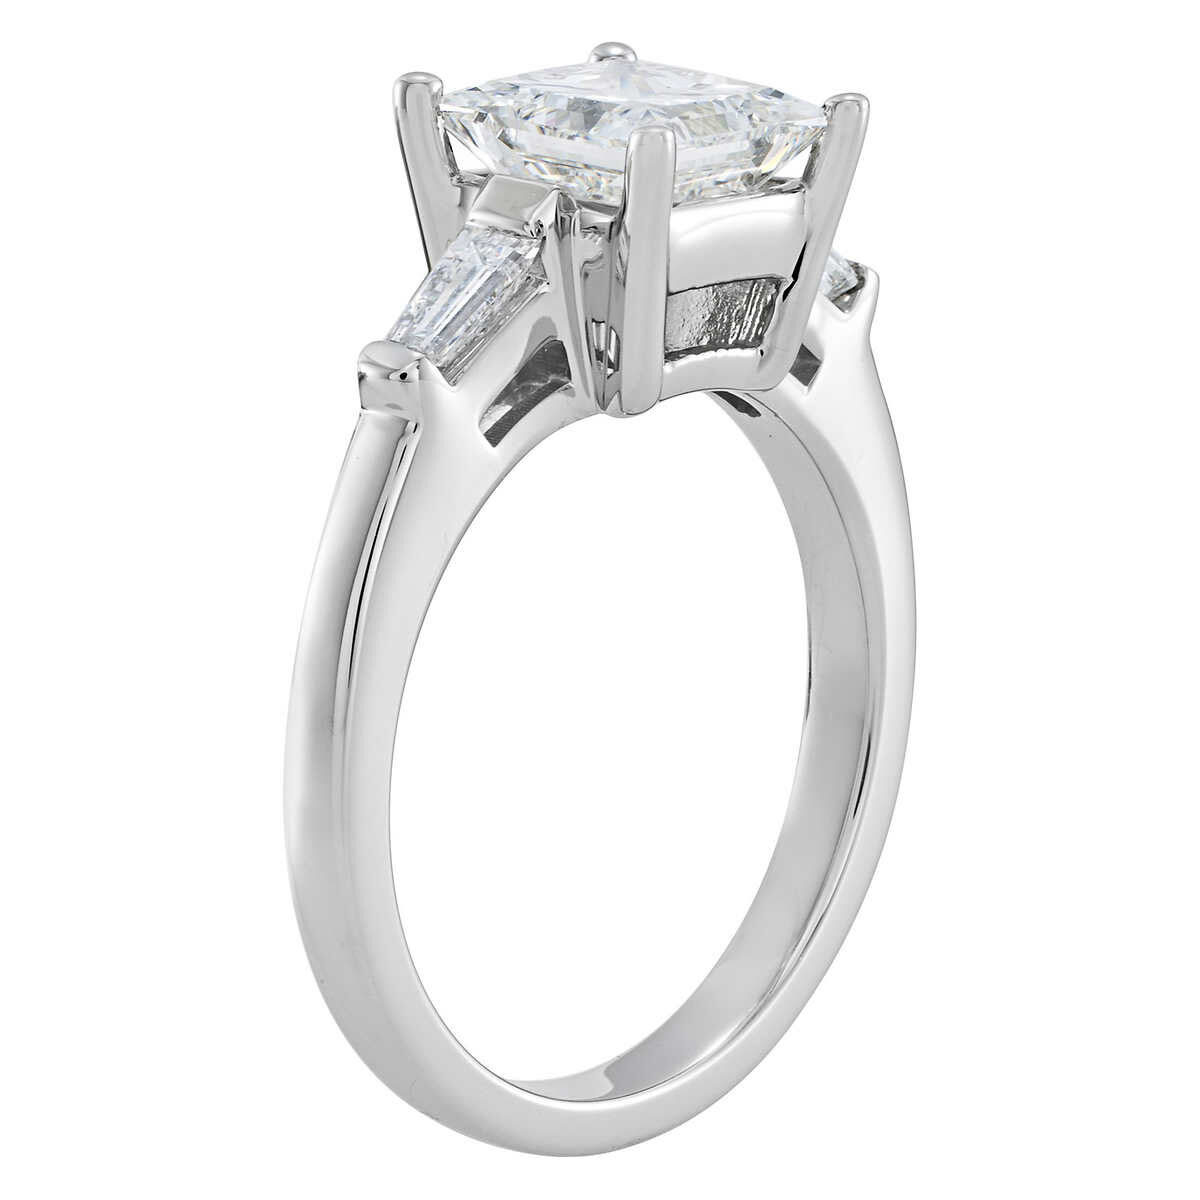 3.75ctw Princess Cut Diamond Baguette Ring